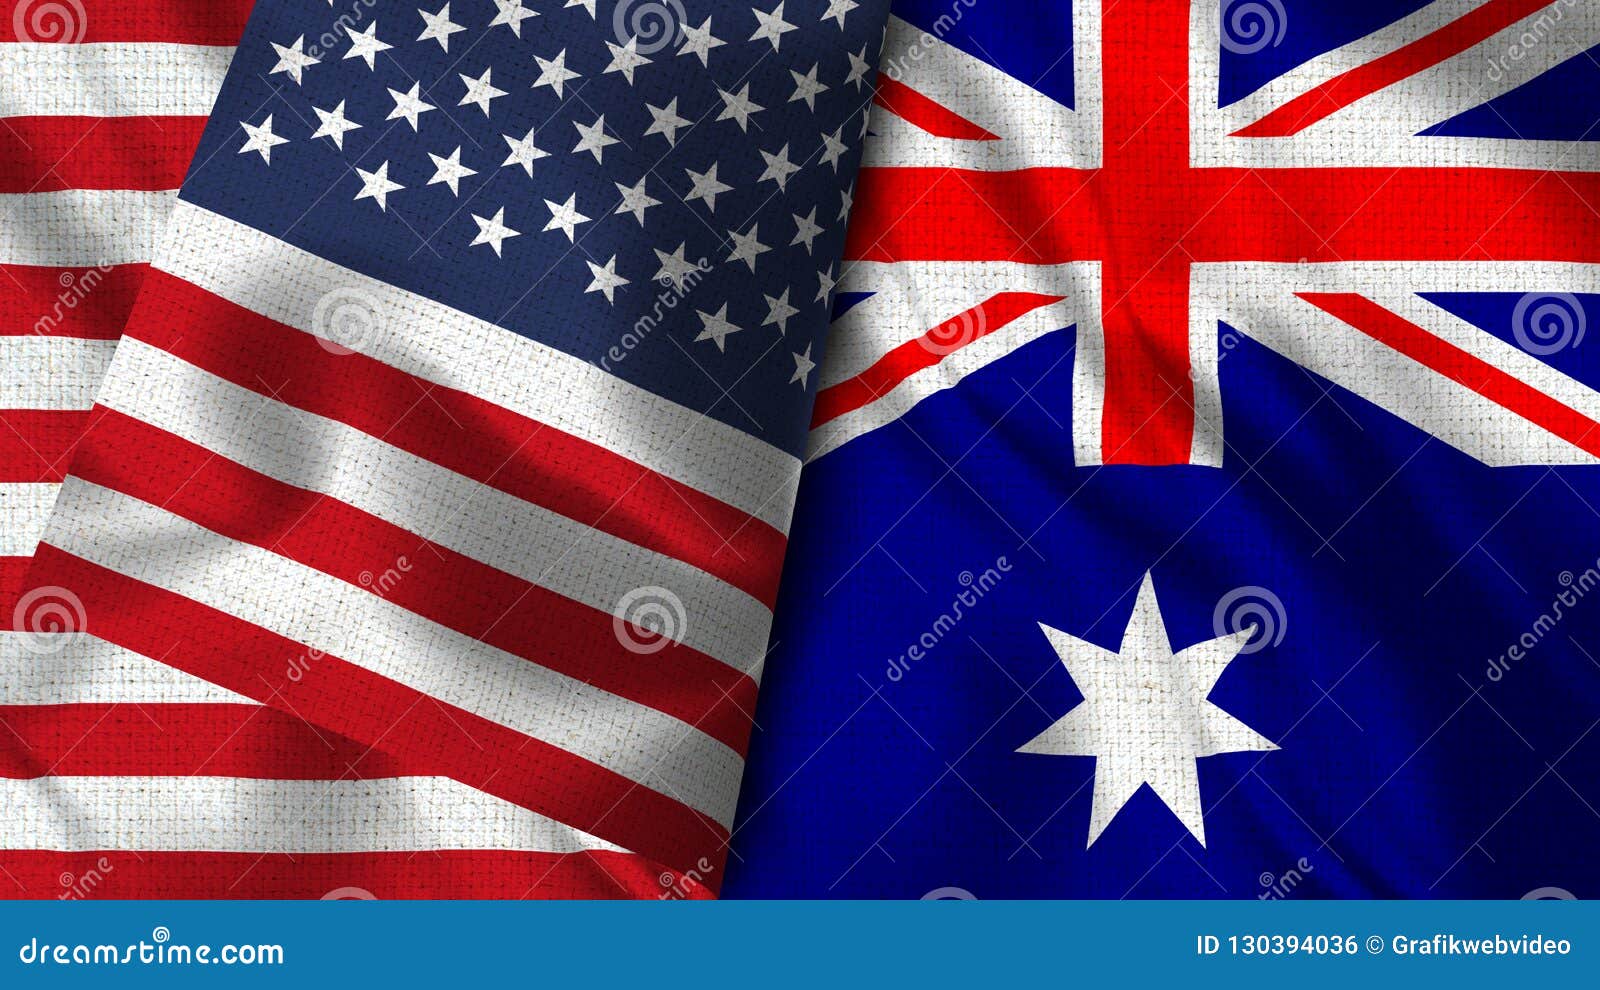 Australia and Usa Flag - 3D Illustration Two Flags Stock Illustration - Illustration high, together: 130394036